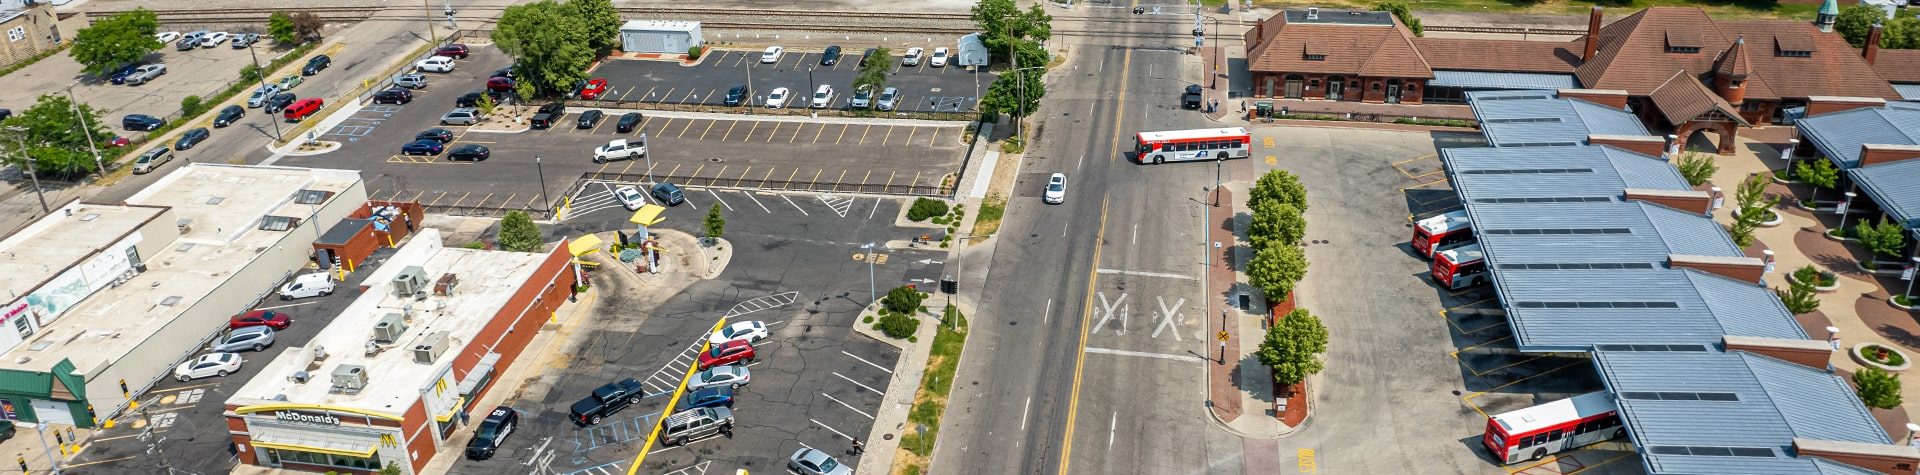 An aerial photograph of the Kalamazoo Transportation Center's bus parking.